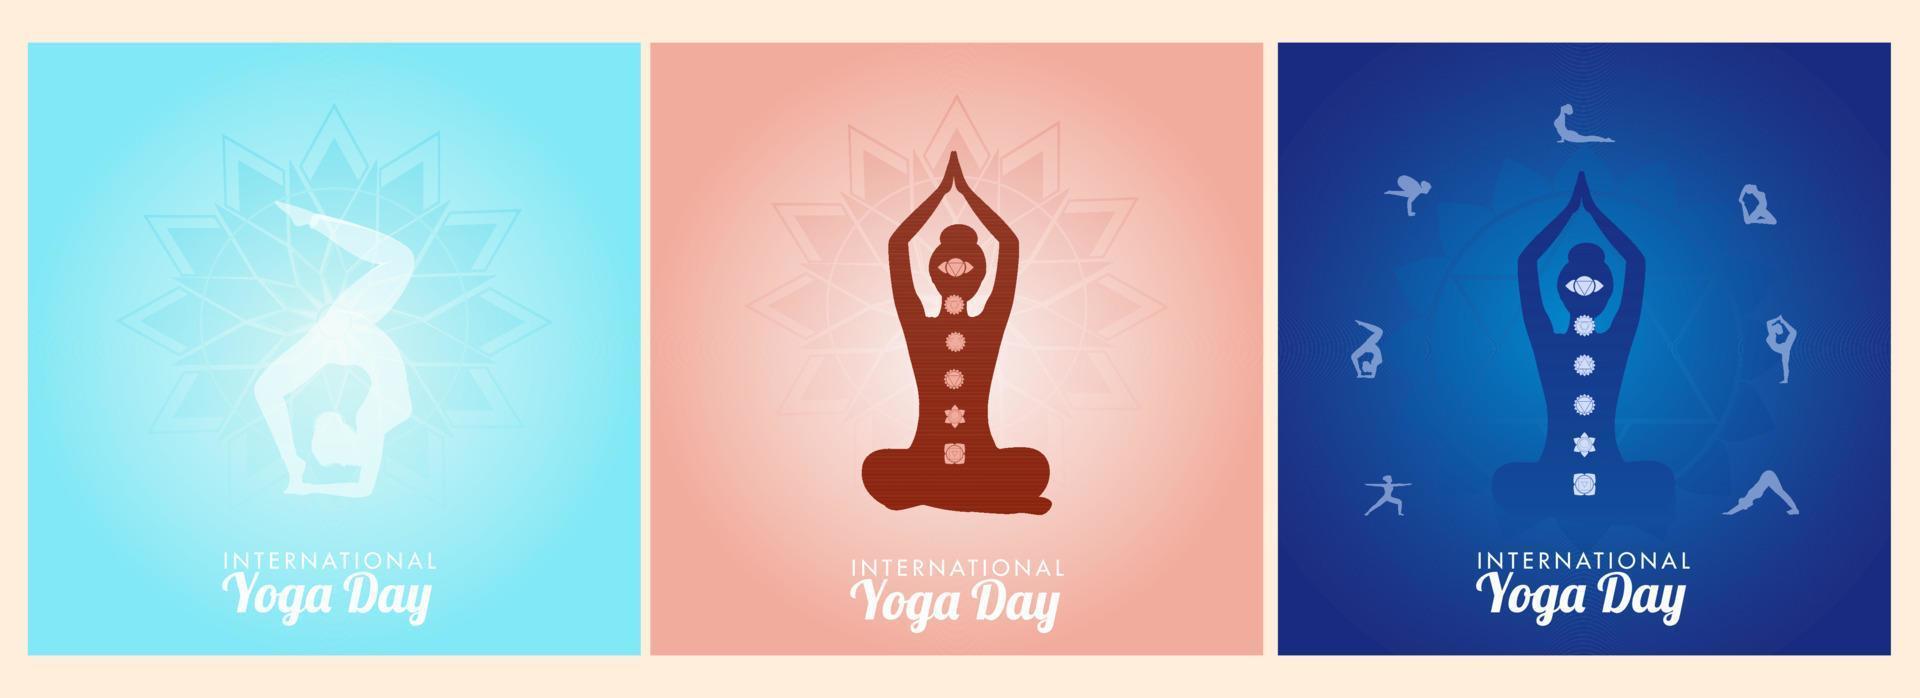 internationell yoga dag affisch design med silhuett kvinna praktiserande yoga asana i tre alternativ. vektor